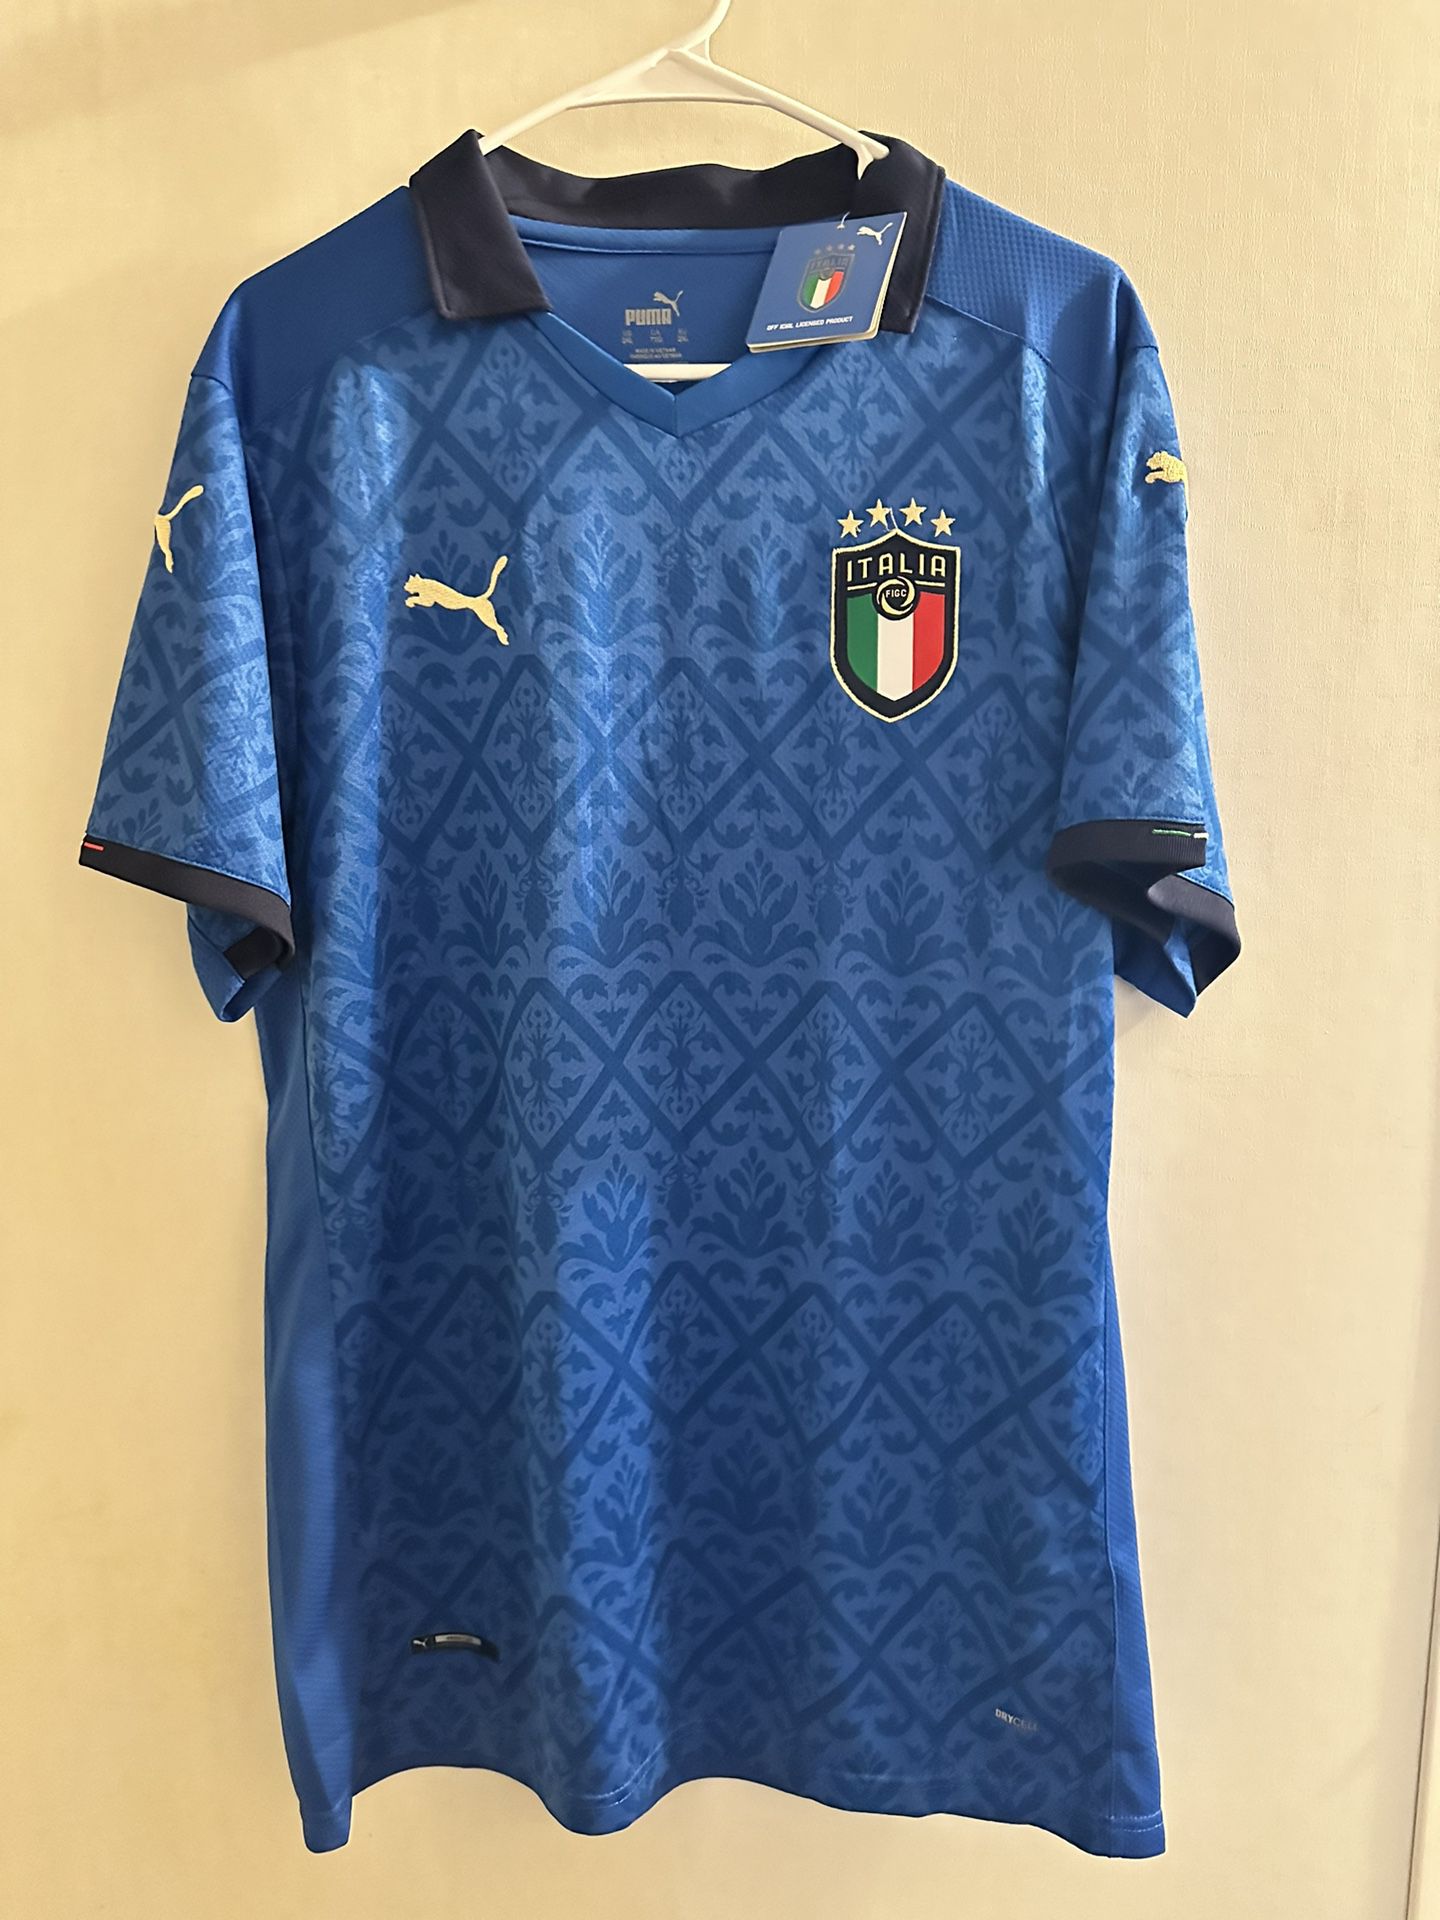 BNWT Puma Italy 2021 Home Soccer Jersey Size 2XL